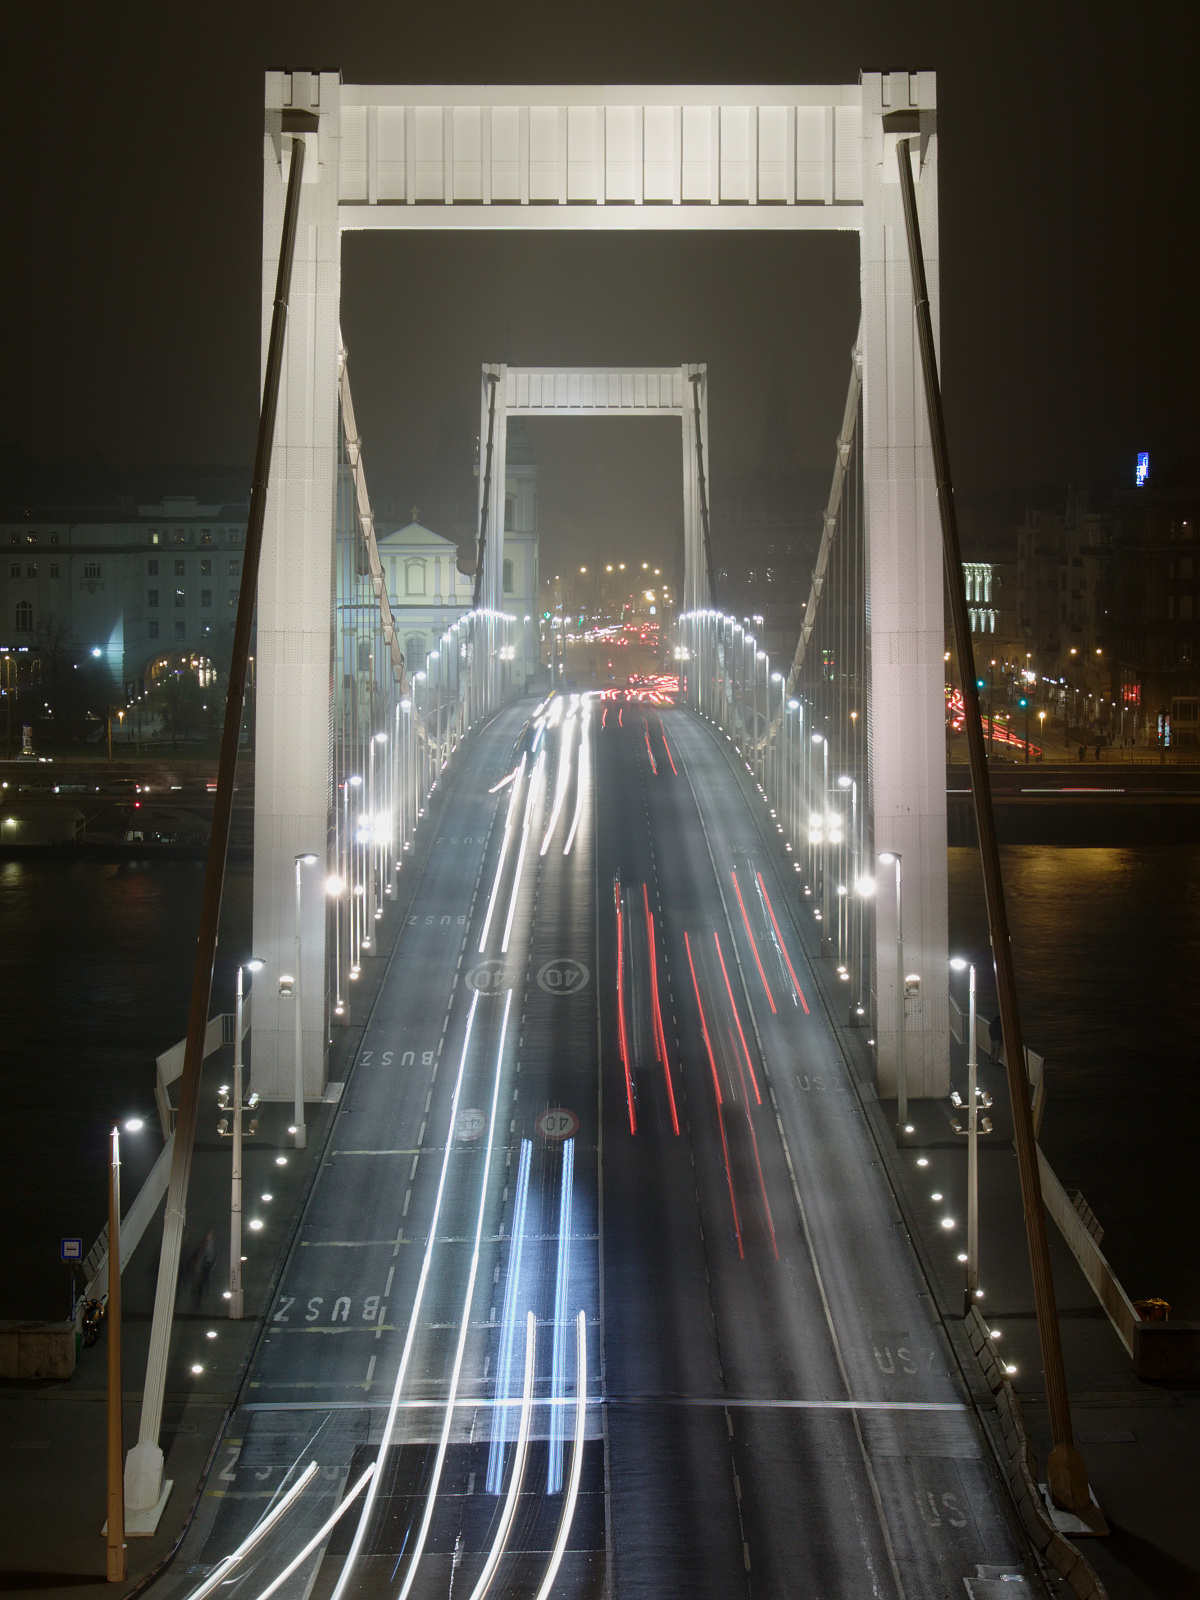 Erzsébet híd - Elizabeth Bridge (Travels » Budapest » Budapest at Night)